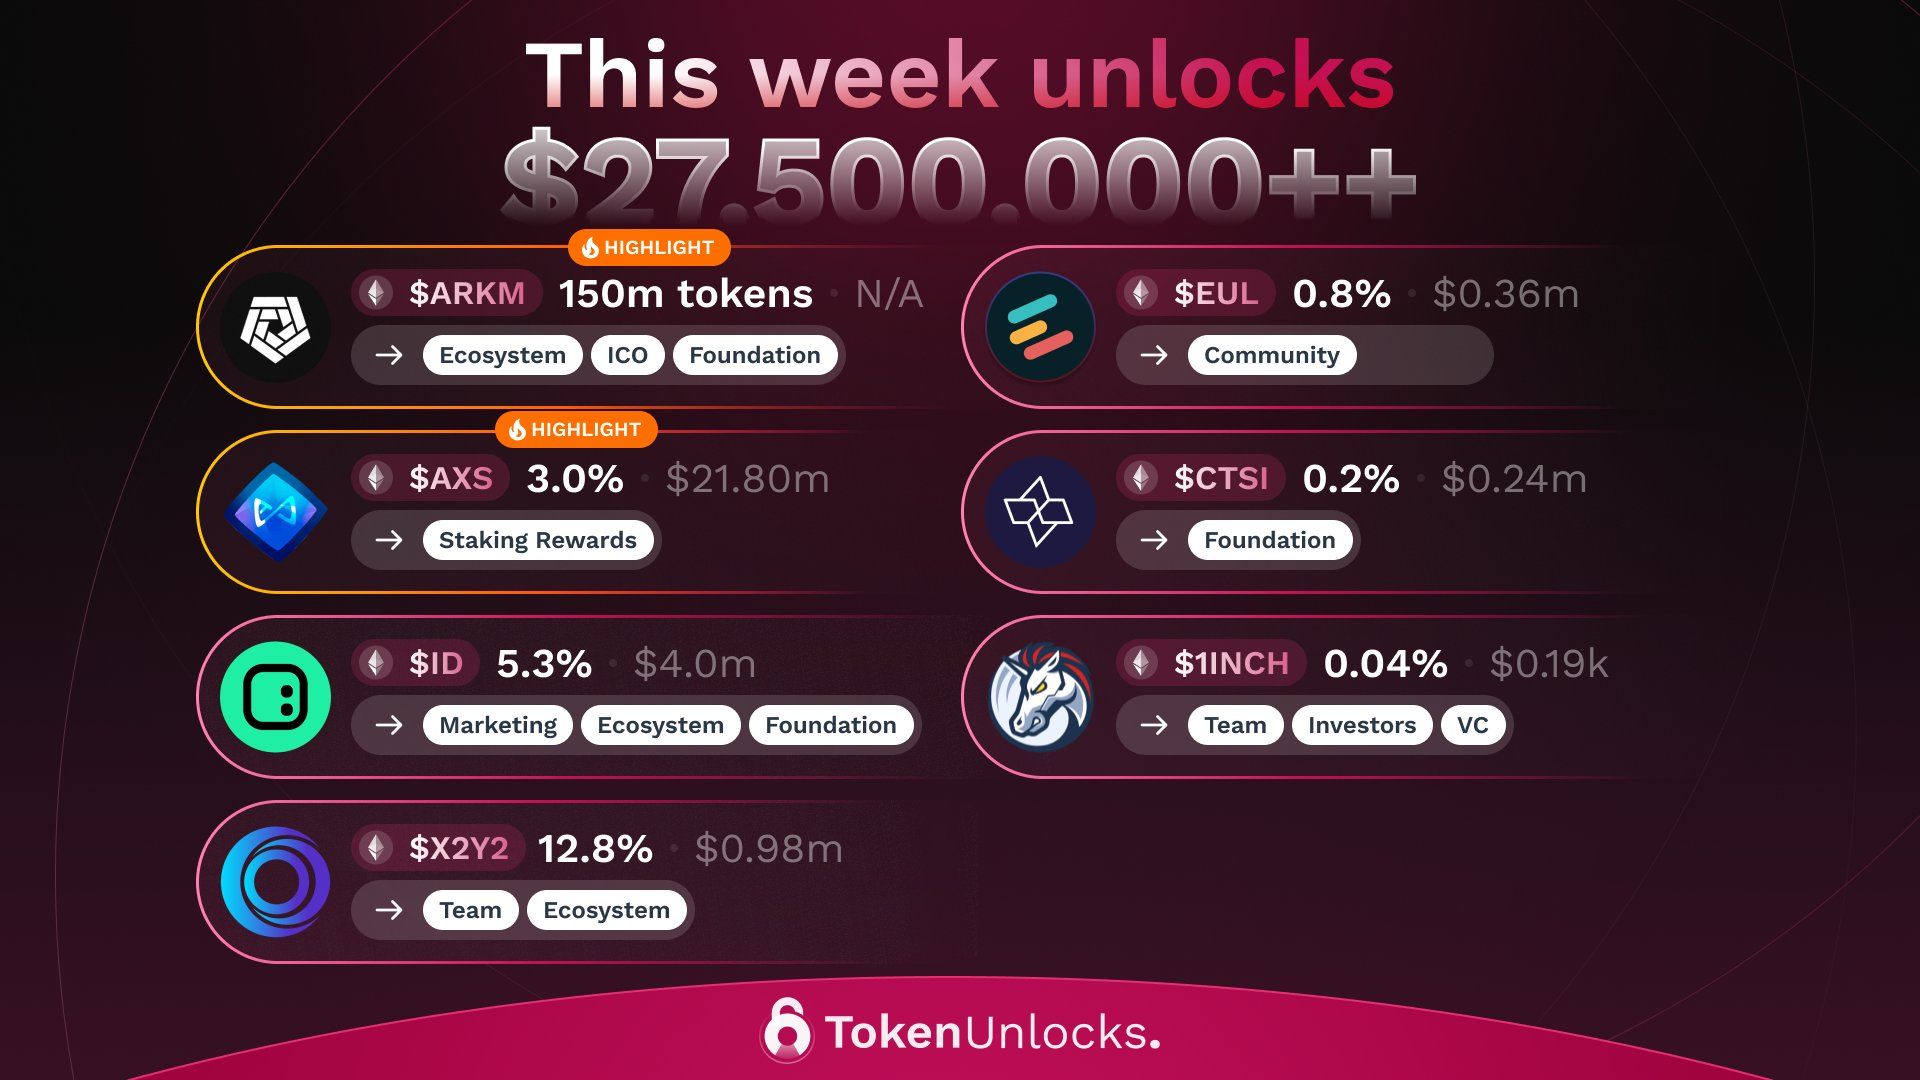 Token unlocks this week. Source: Twitter/@Token_Unlocks